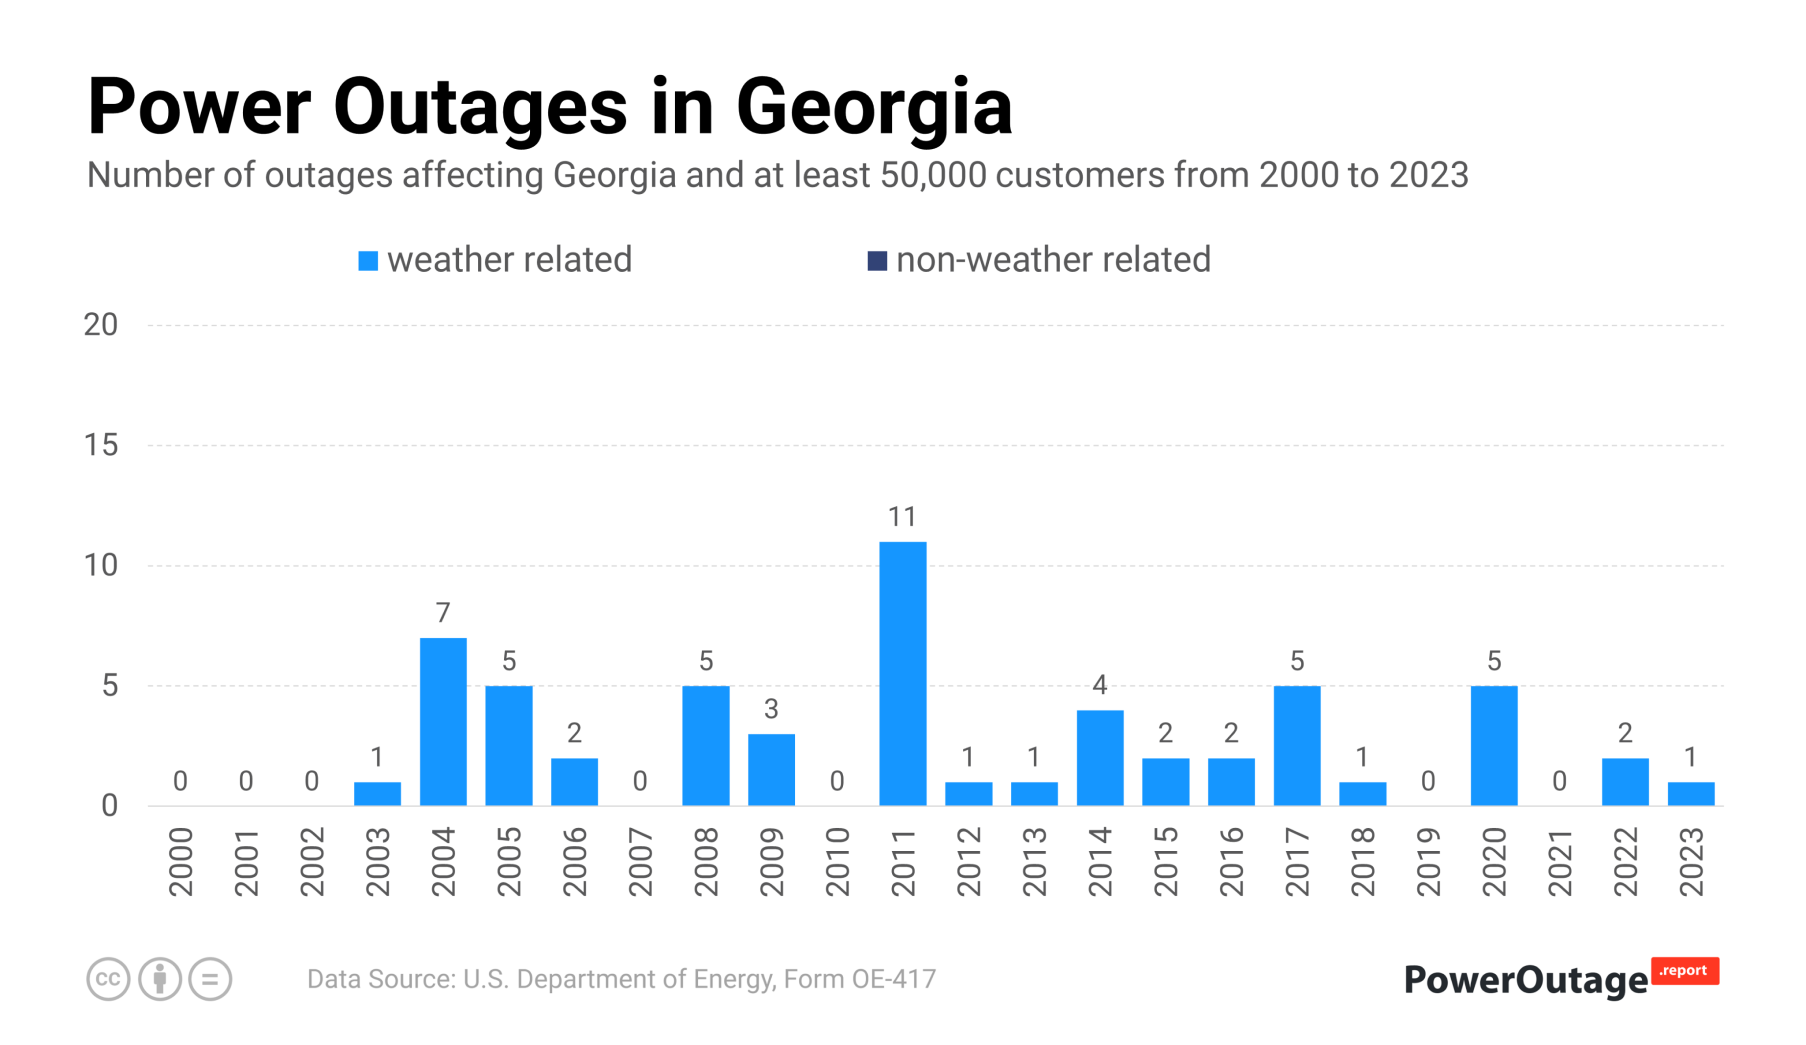 Georgia Power Outage Statistics (2000 - 2022)